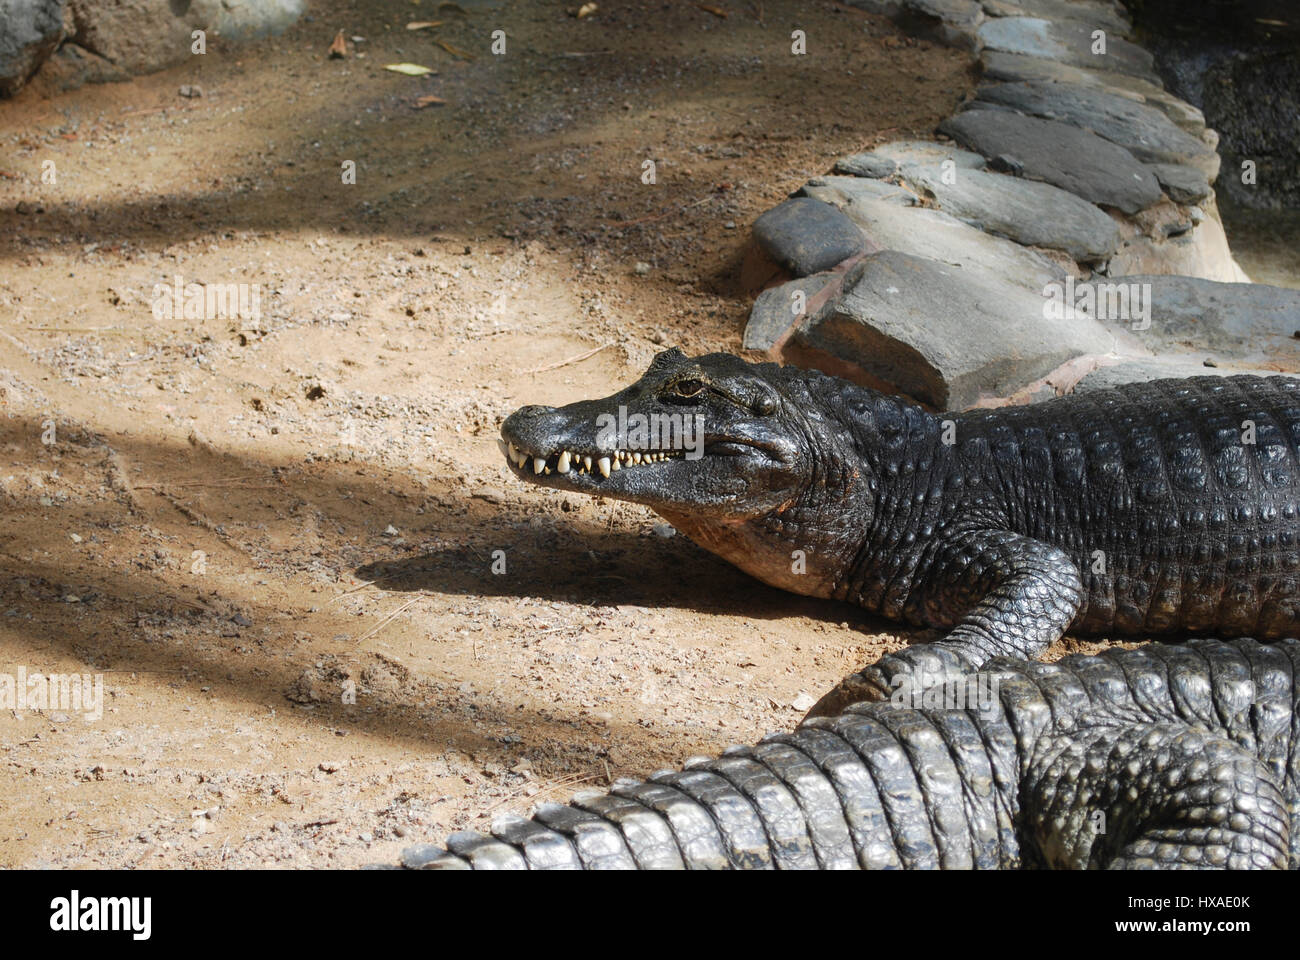 Crocodile (Caiman crocodilus) adult on the sand. Stock Photo